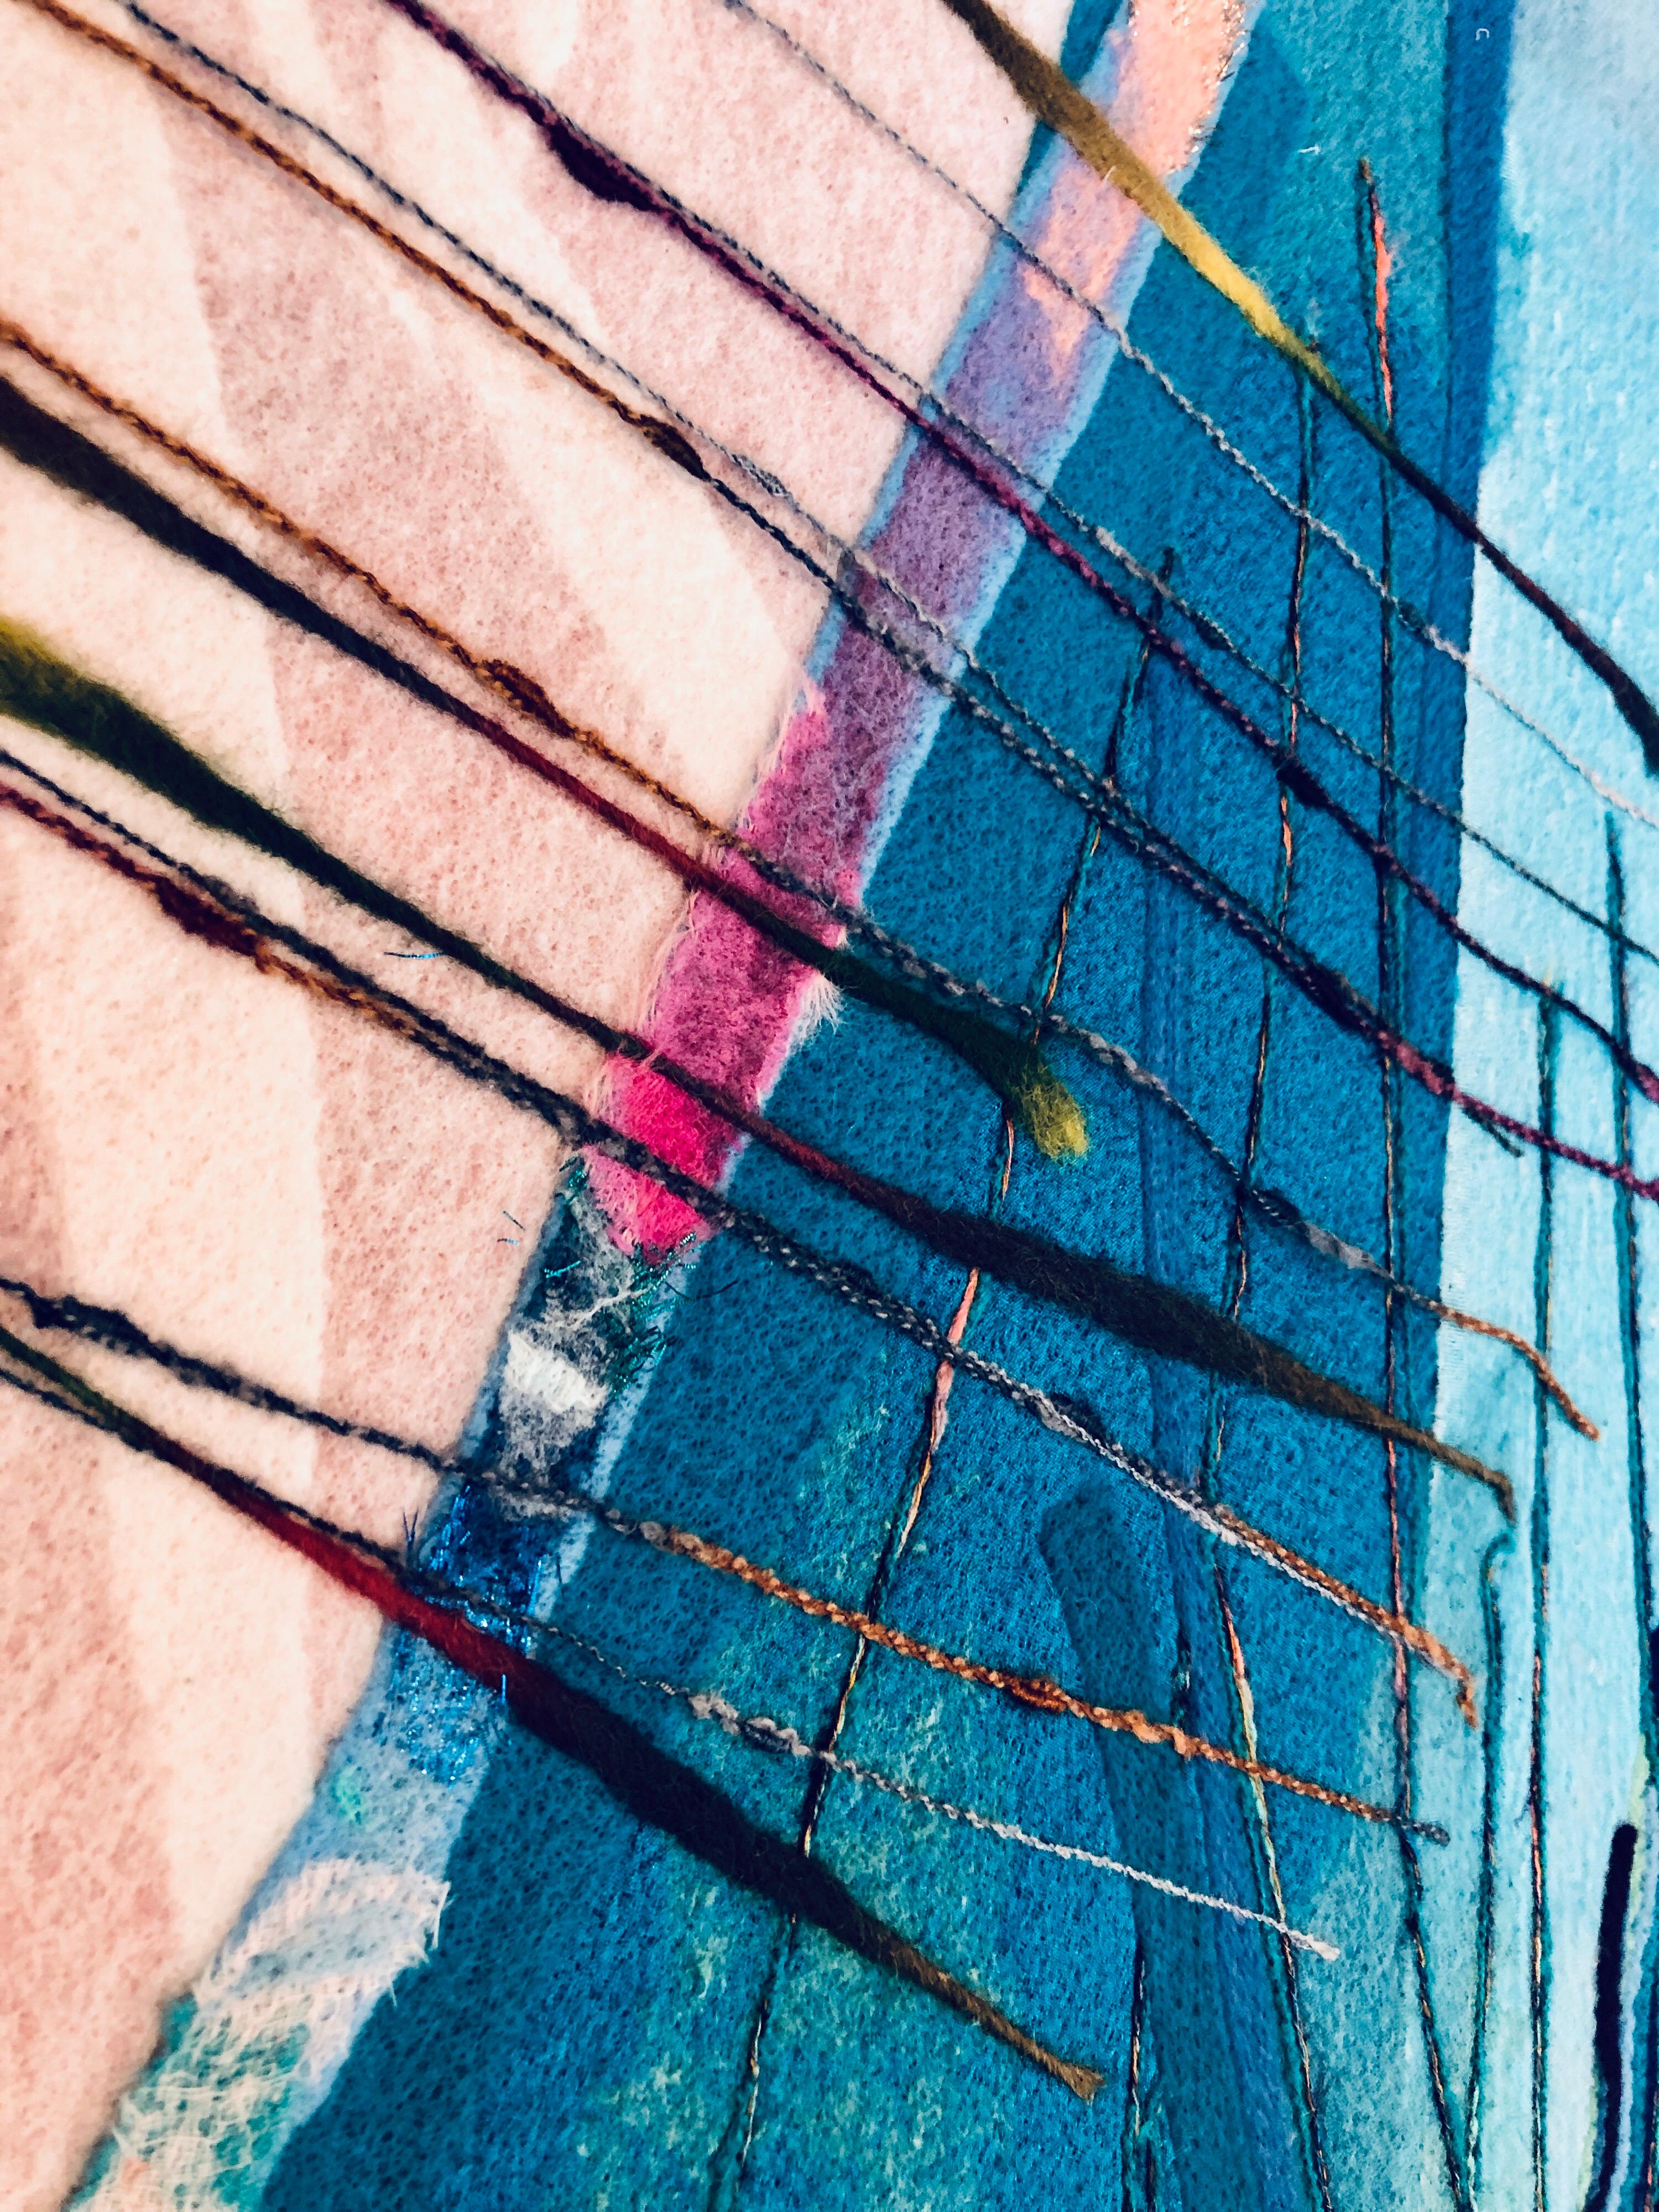 Fiber Art Collage Israeli Modernist Vibrant Colorful Tapestry Wall Hanging Rug For Sale 4